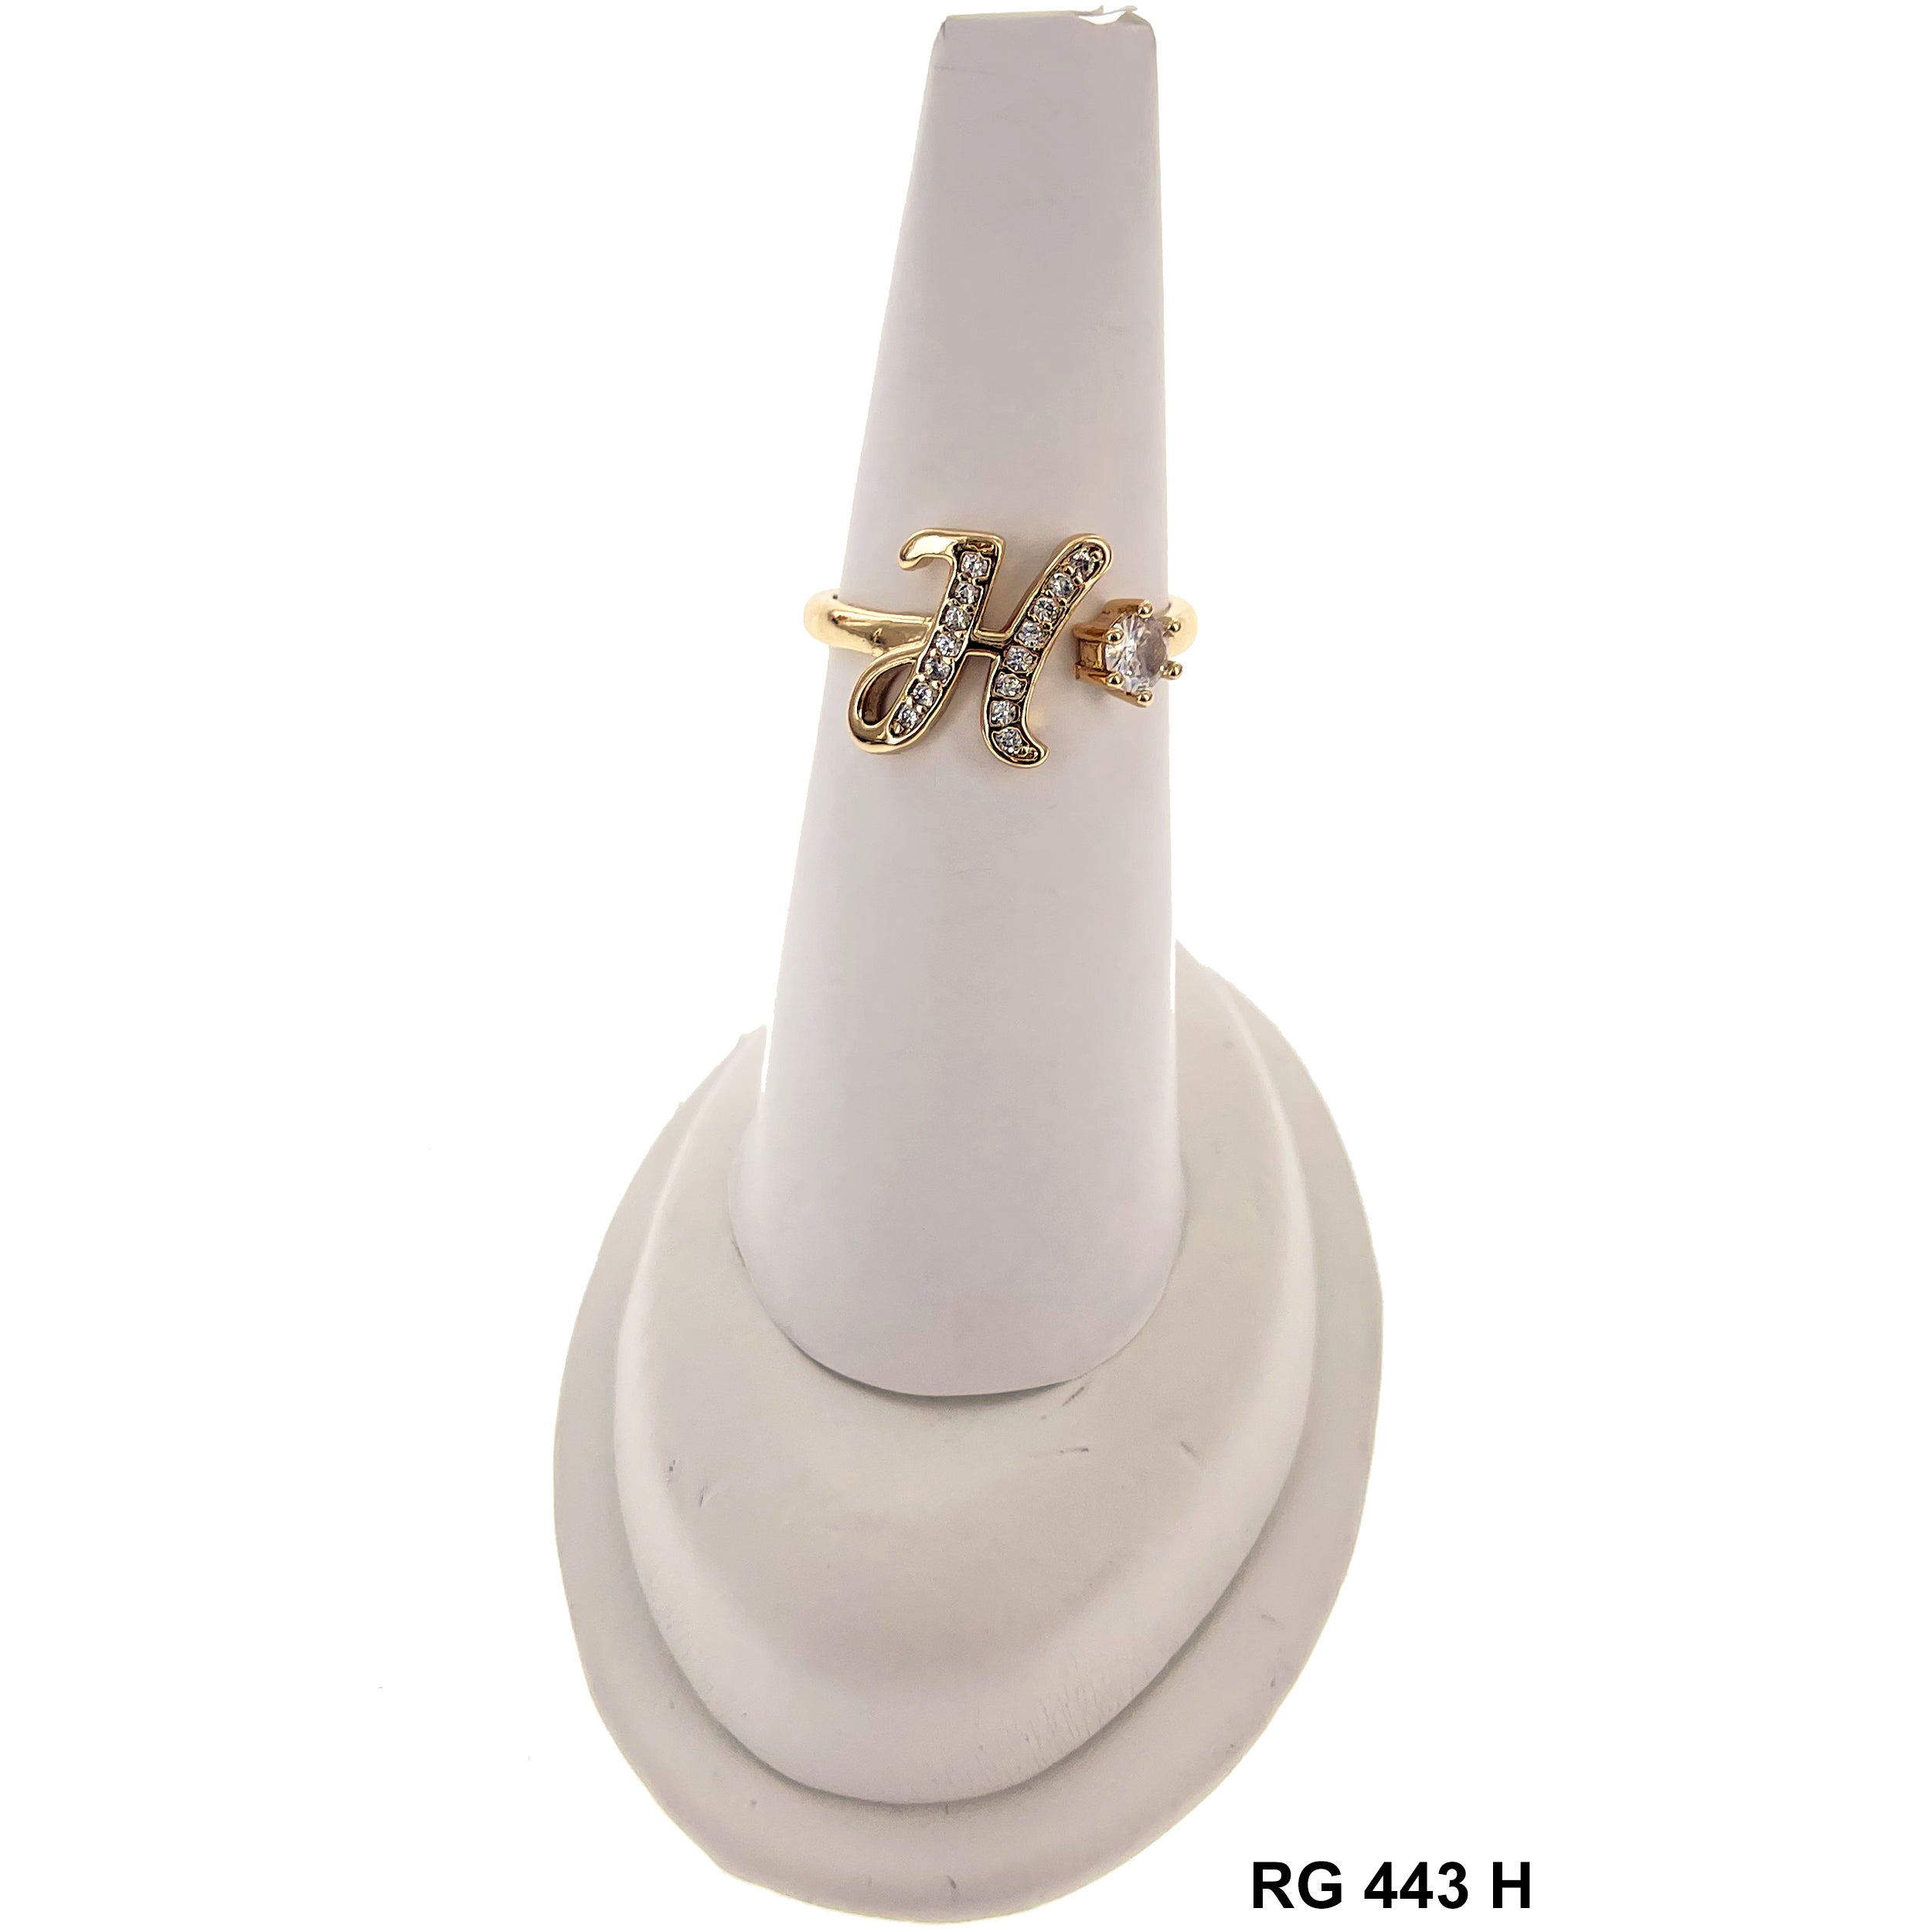 Initial Adjustable Ring RG 443 H